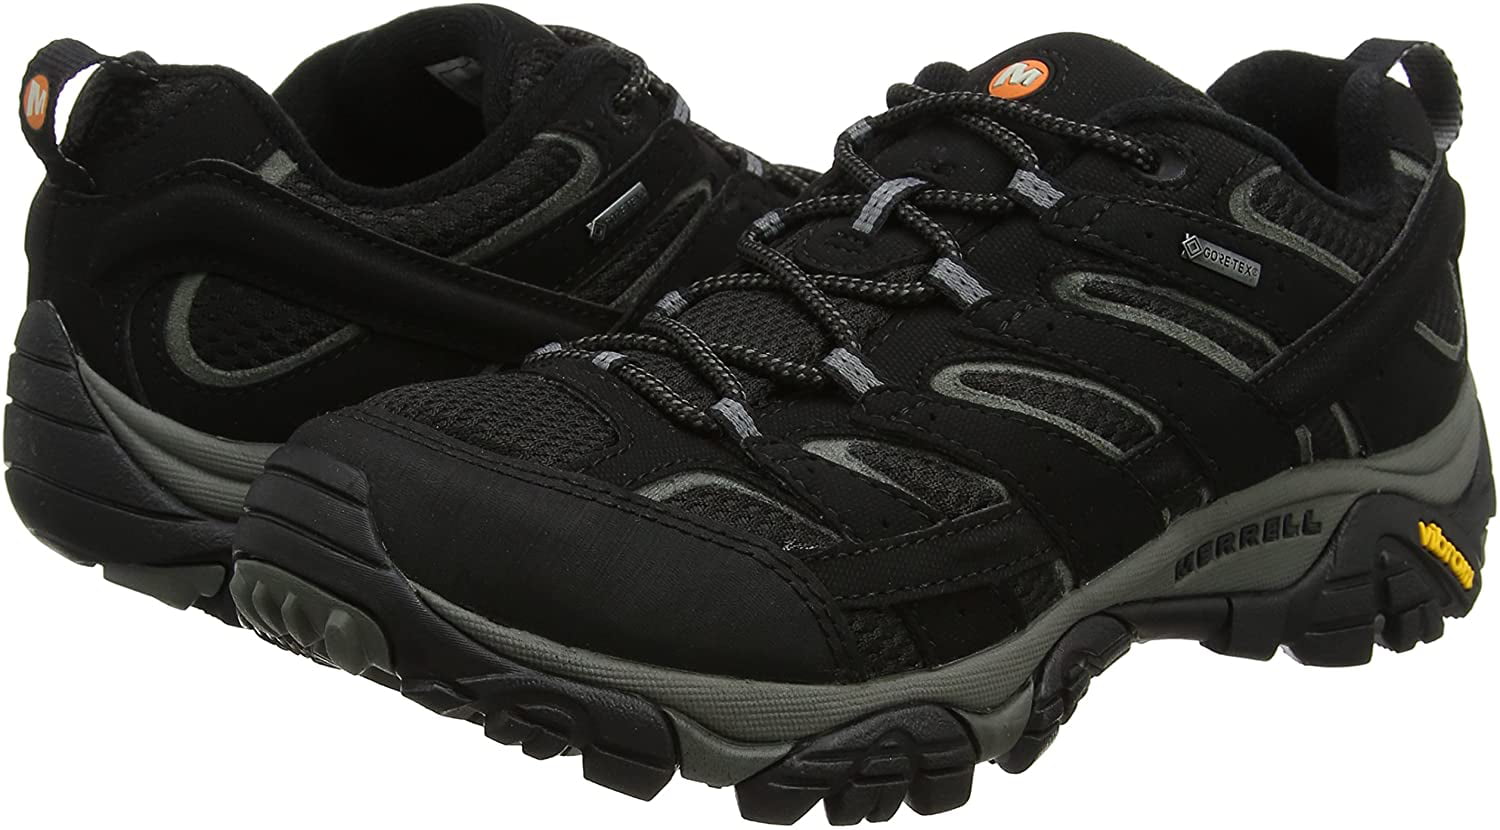 Merrell Men's Moab 2 GTX Low Rise Hiking Boots, Black/Black, 10 M 